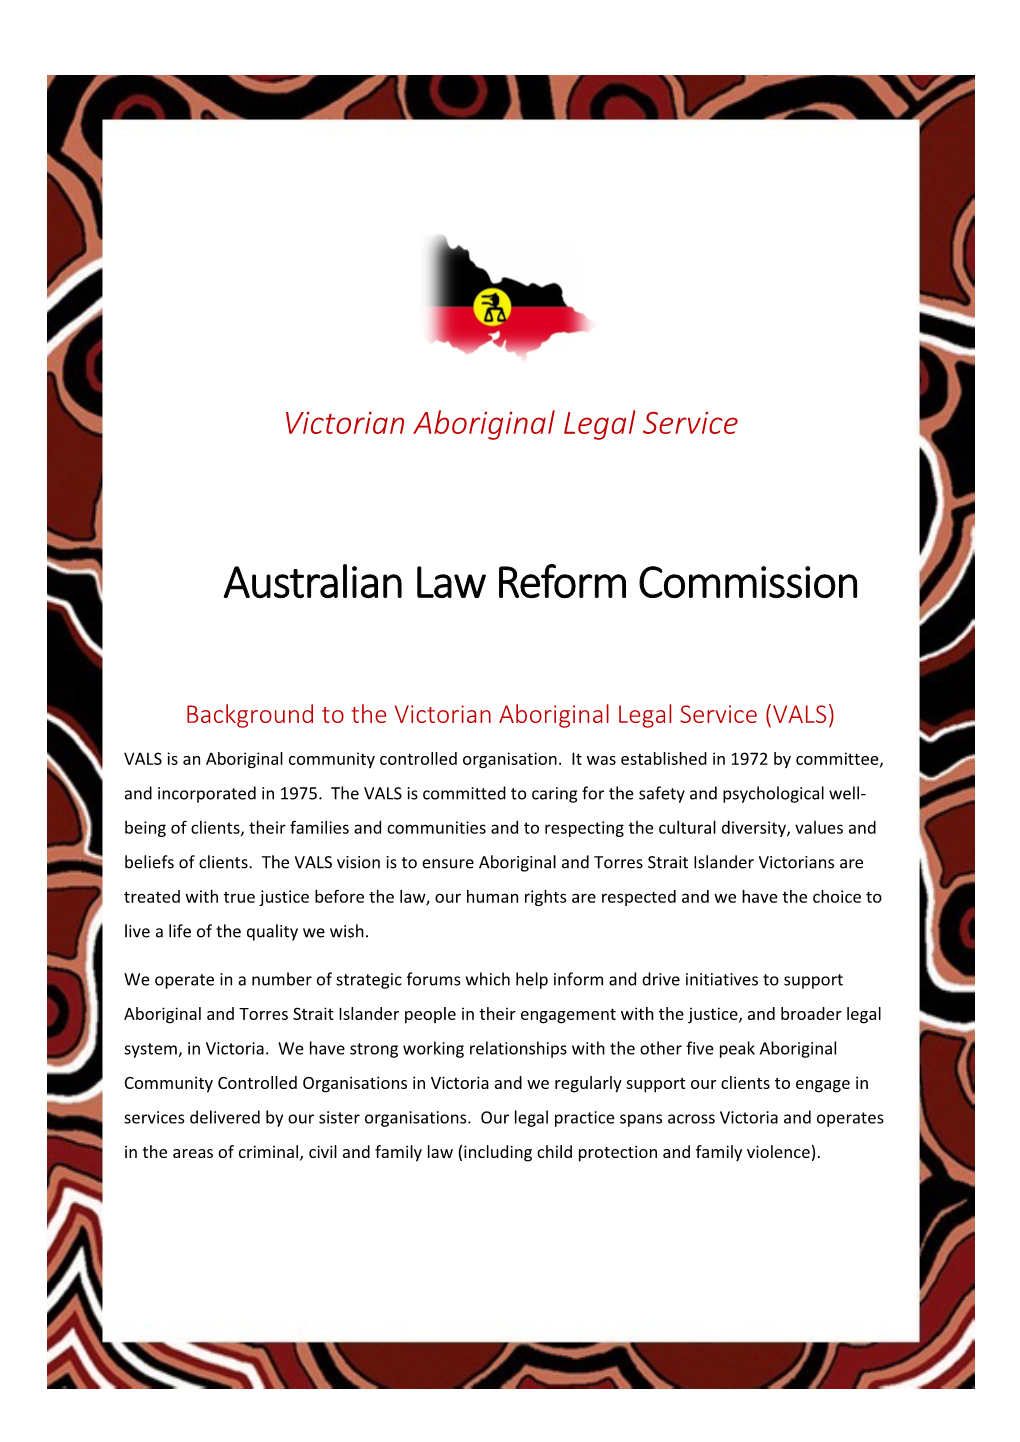 Victorian Aboriginal Legal Service VALS